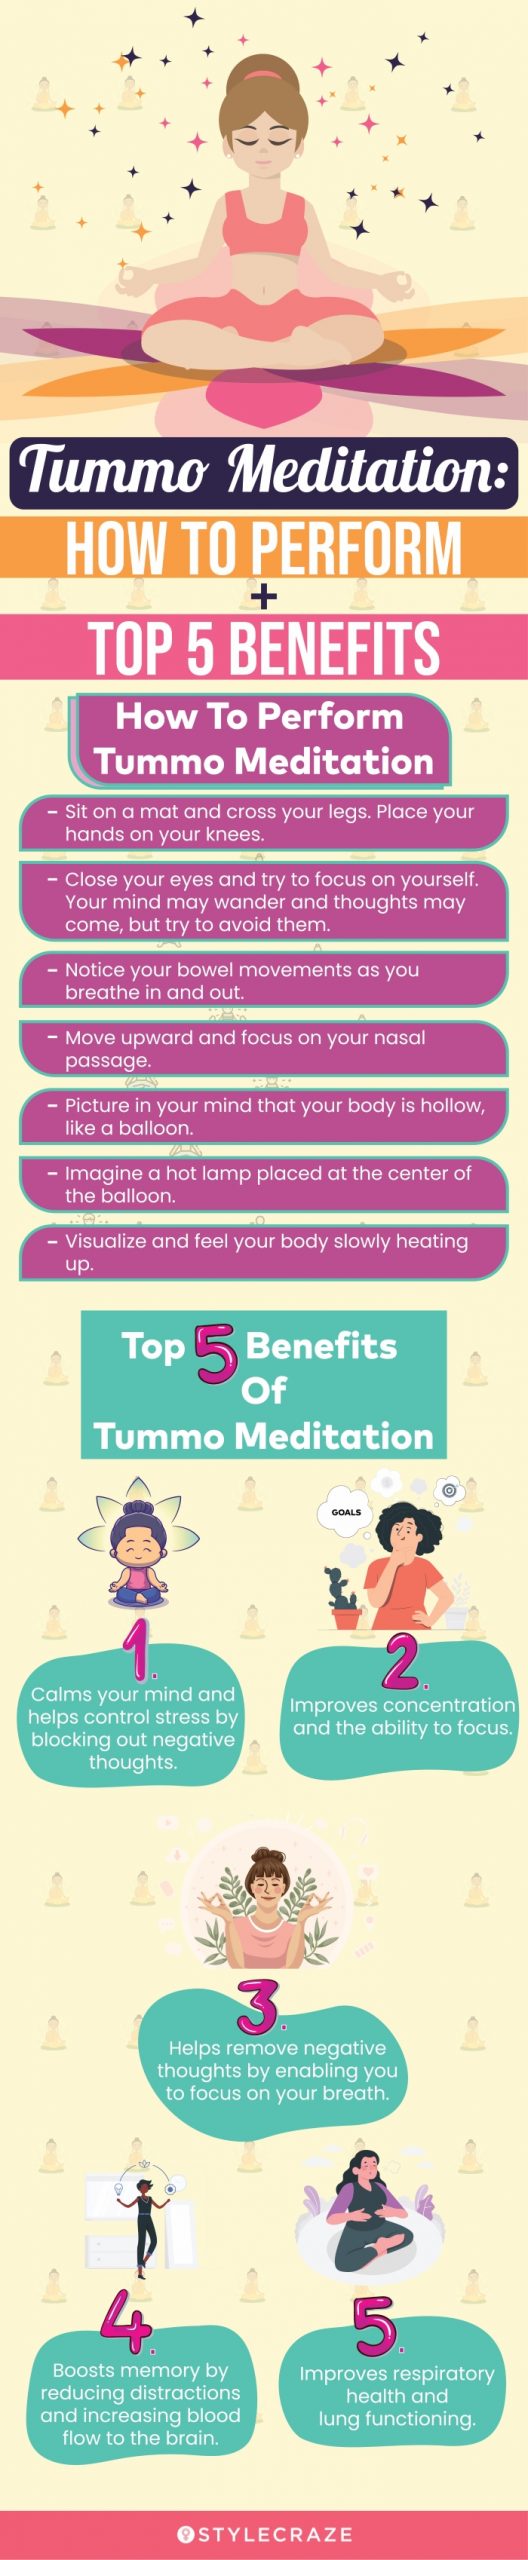 tumma meditation: how to perform + top 5 benefits [infographic]